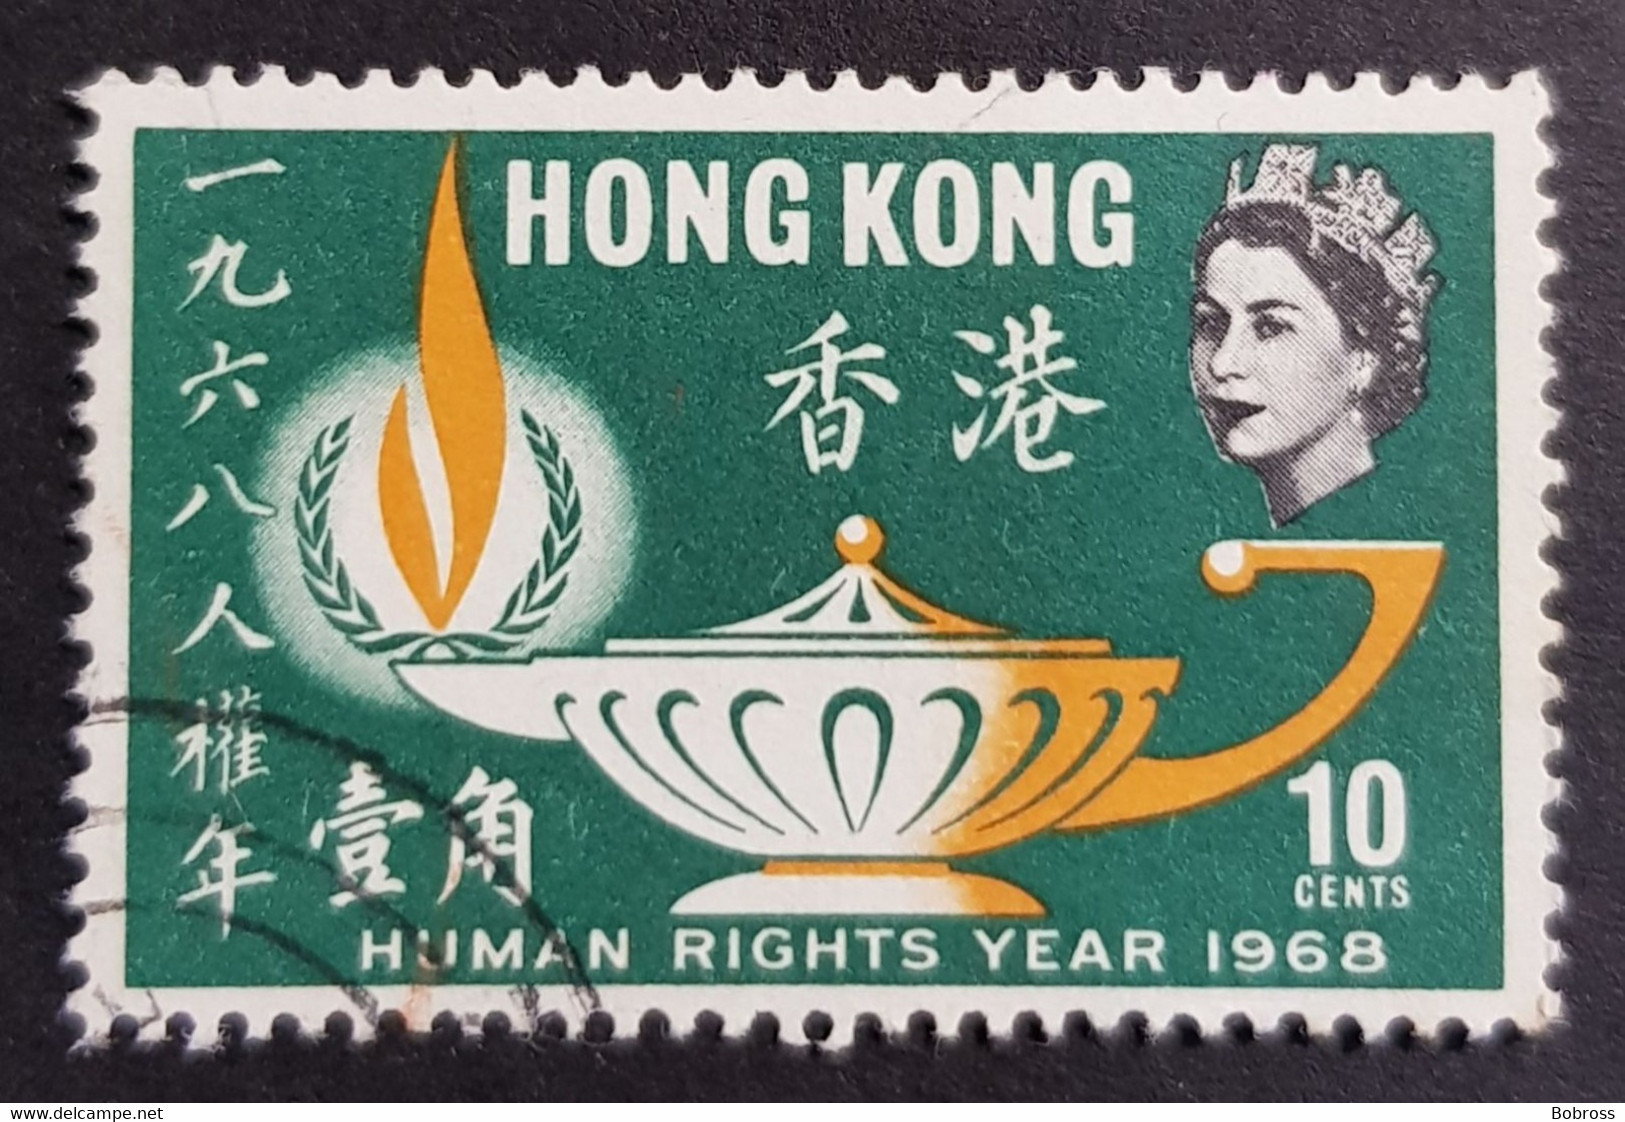 1968 Human Rights Year, Hong Kong, China, Used - Oblitérés